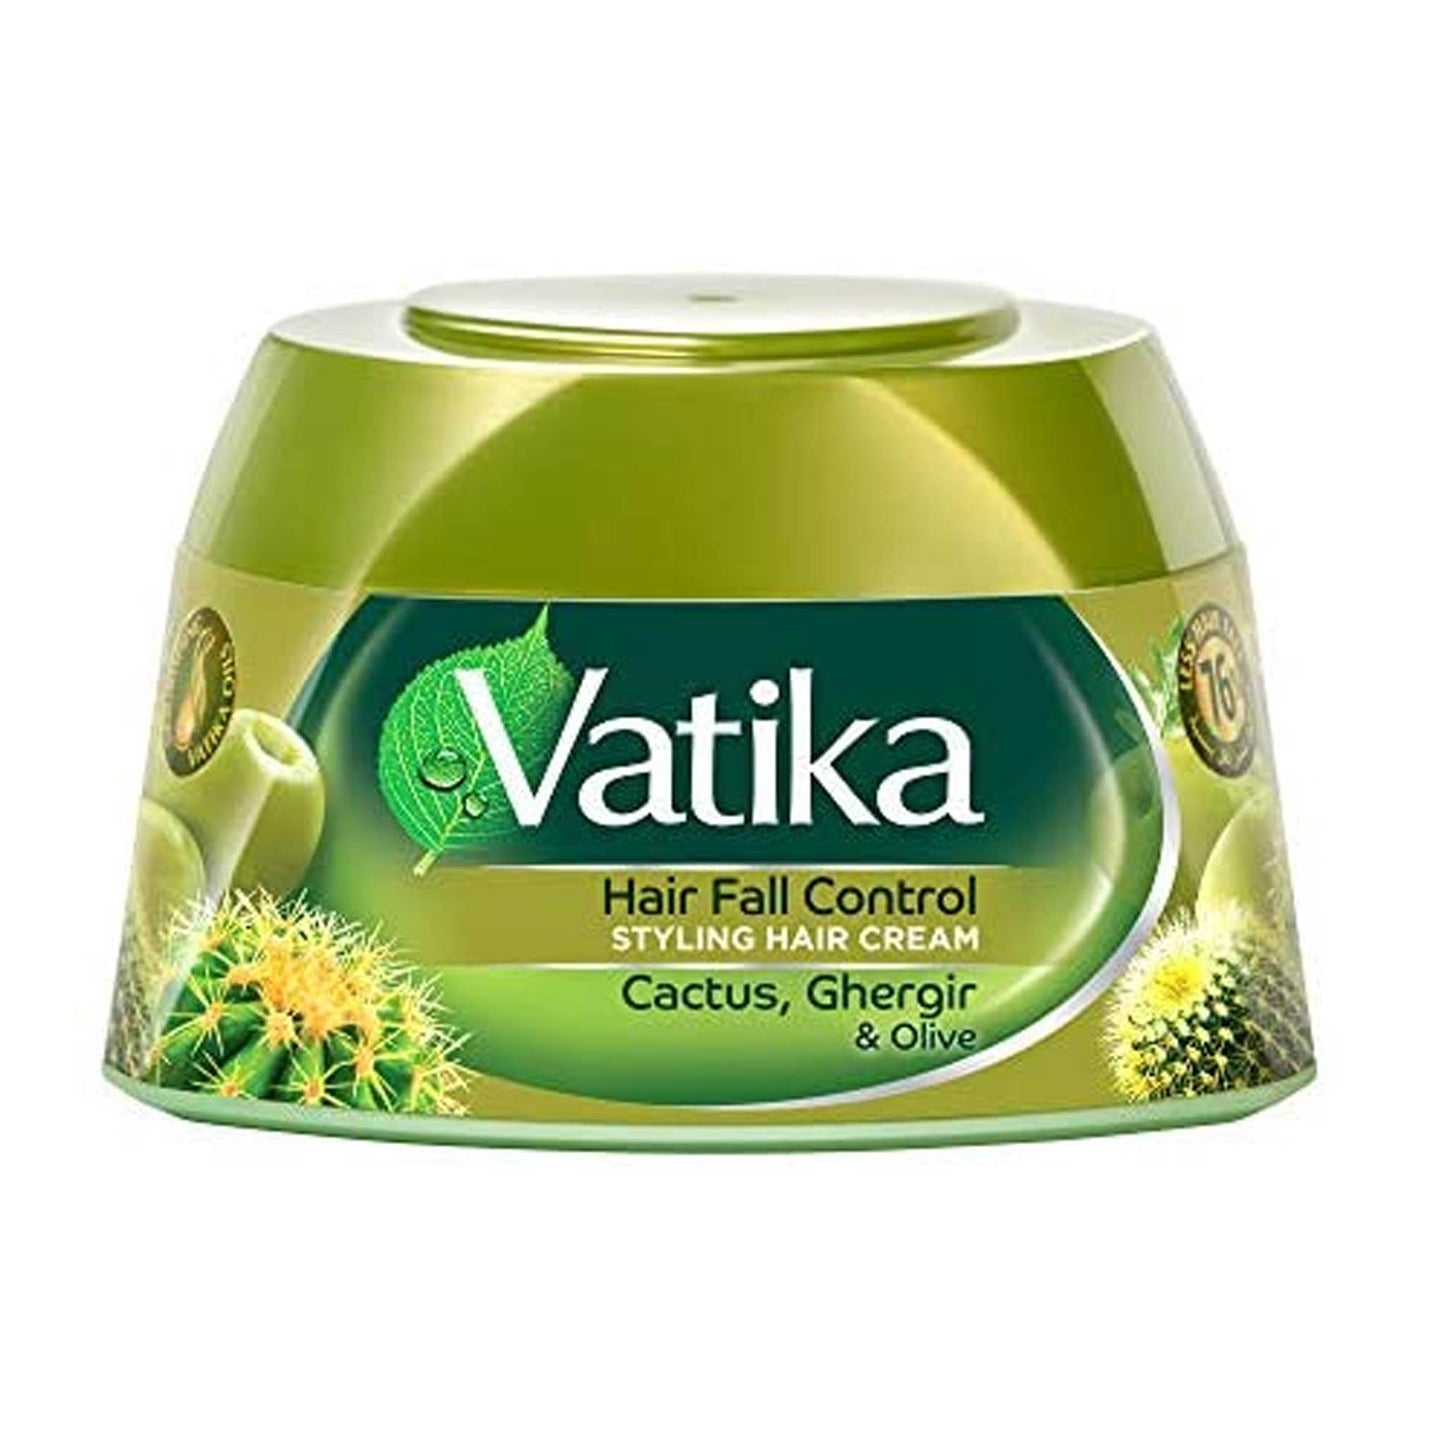 VATIKA - HAIR FALL CONTROL STYLING HAIR CREAM WITH CACTUS, GHERGIR & OLIVE - 140ML